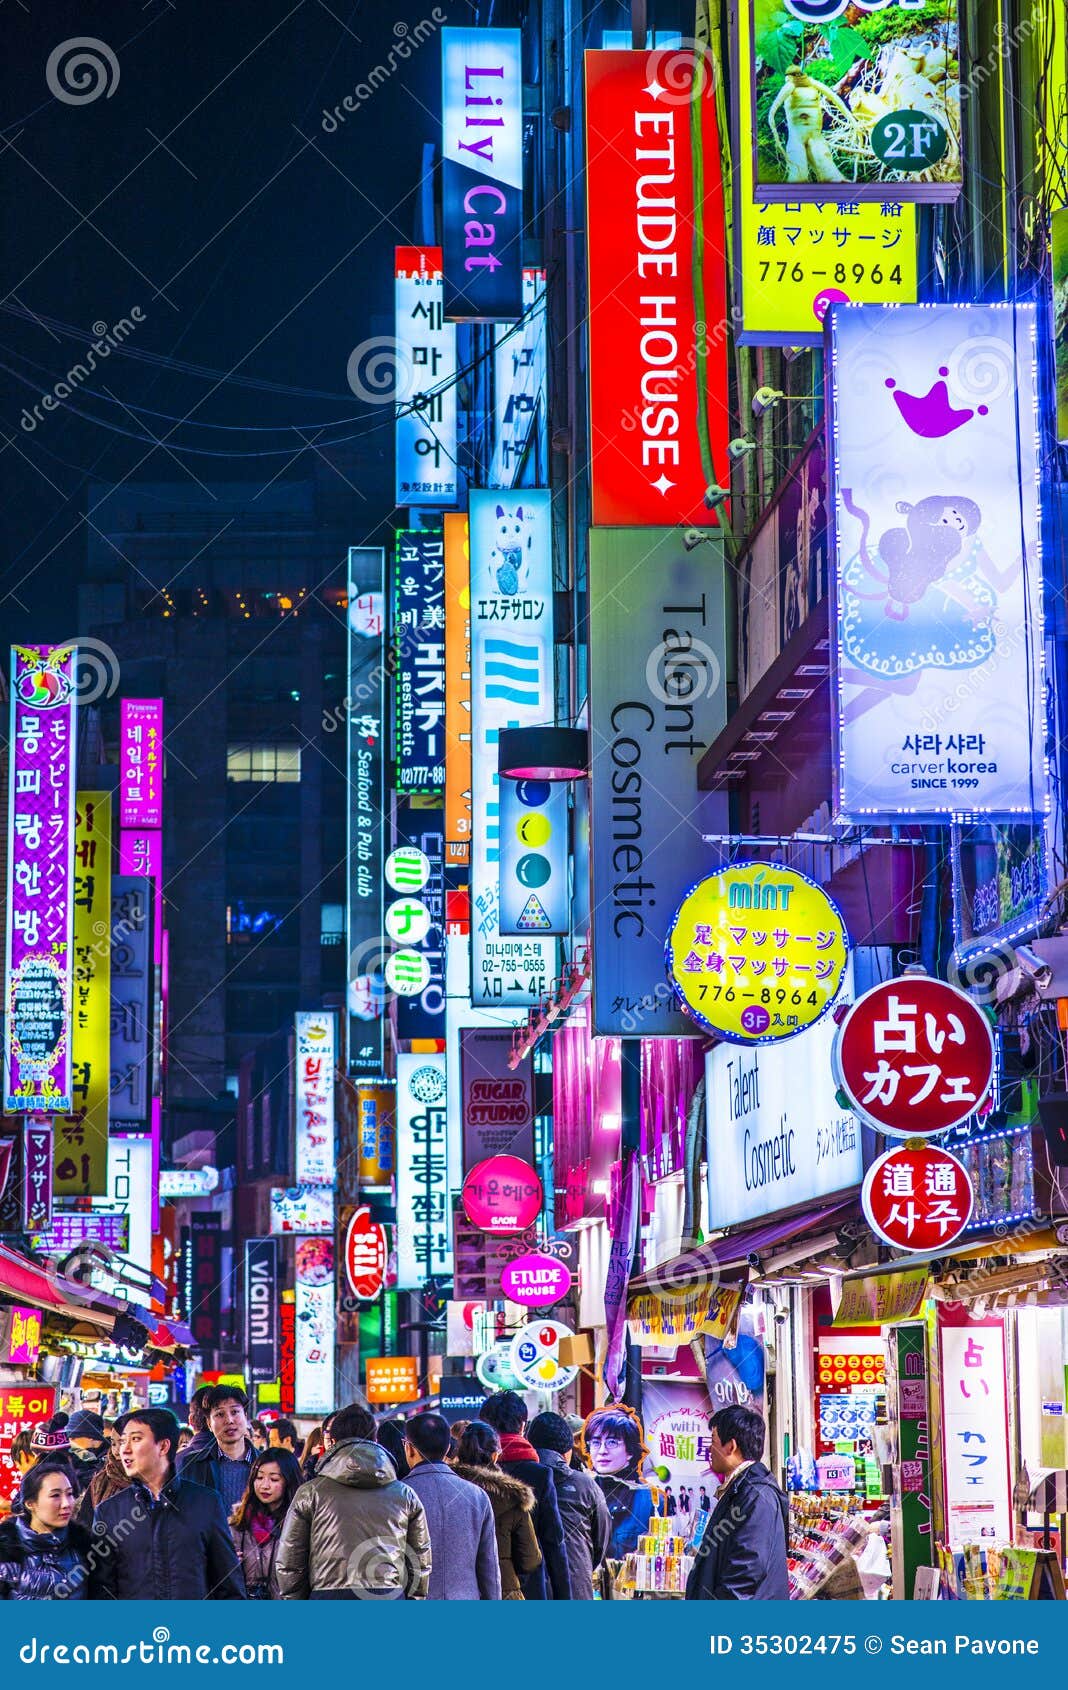 tumblr neon signs Image: Image Seoul  Nightlife  35302475 Editorial